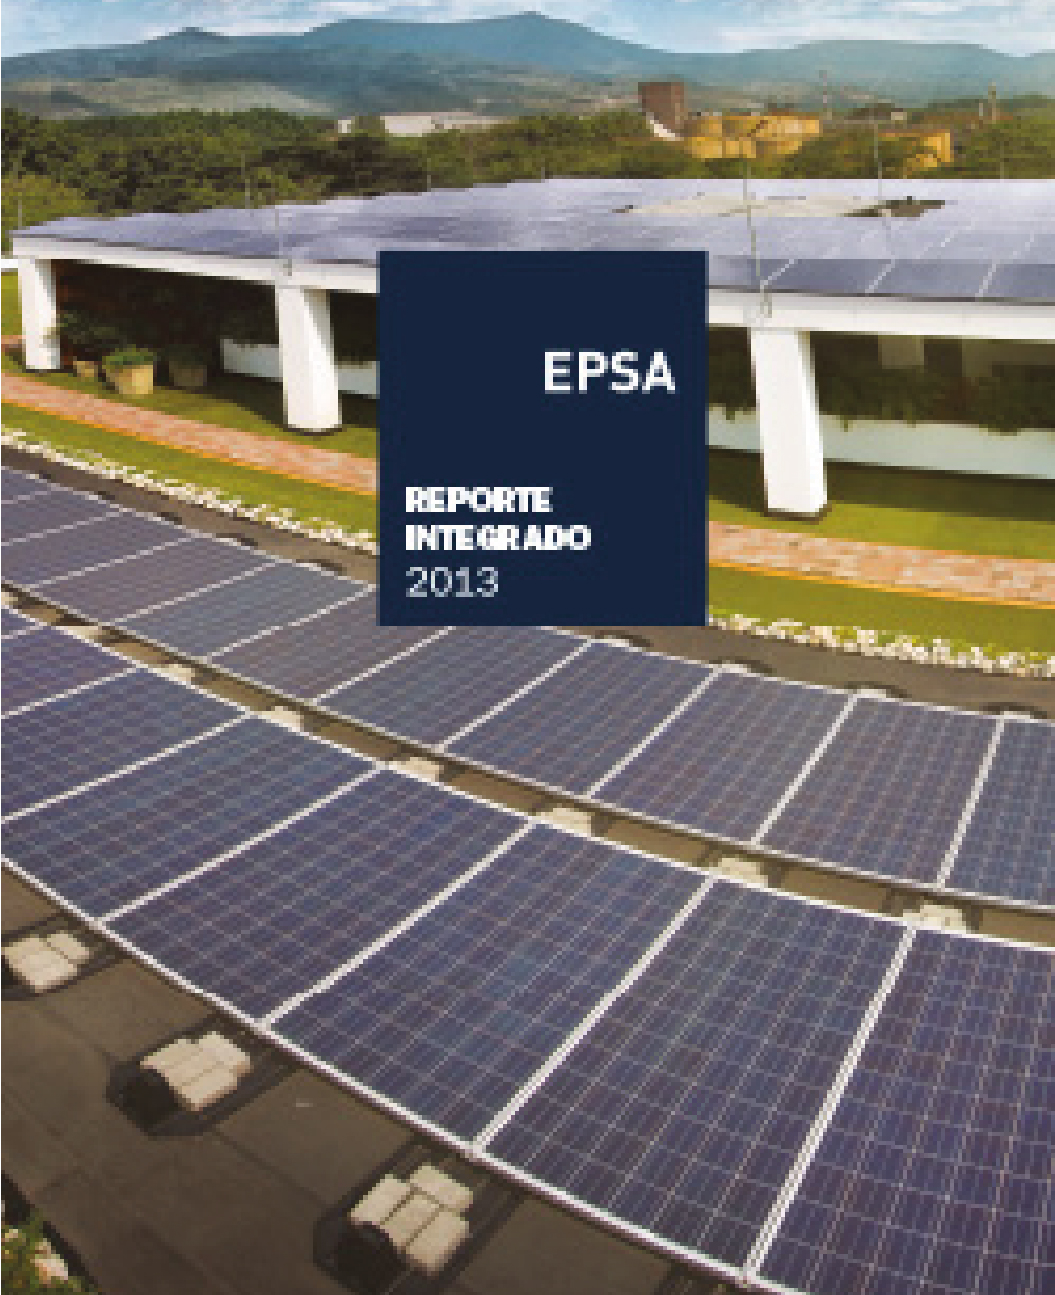 Reporte Integrado EPSA 2013